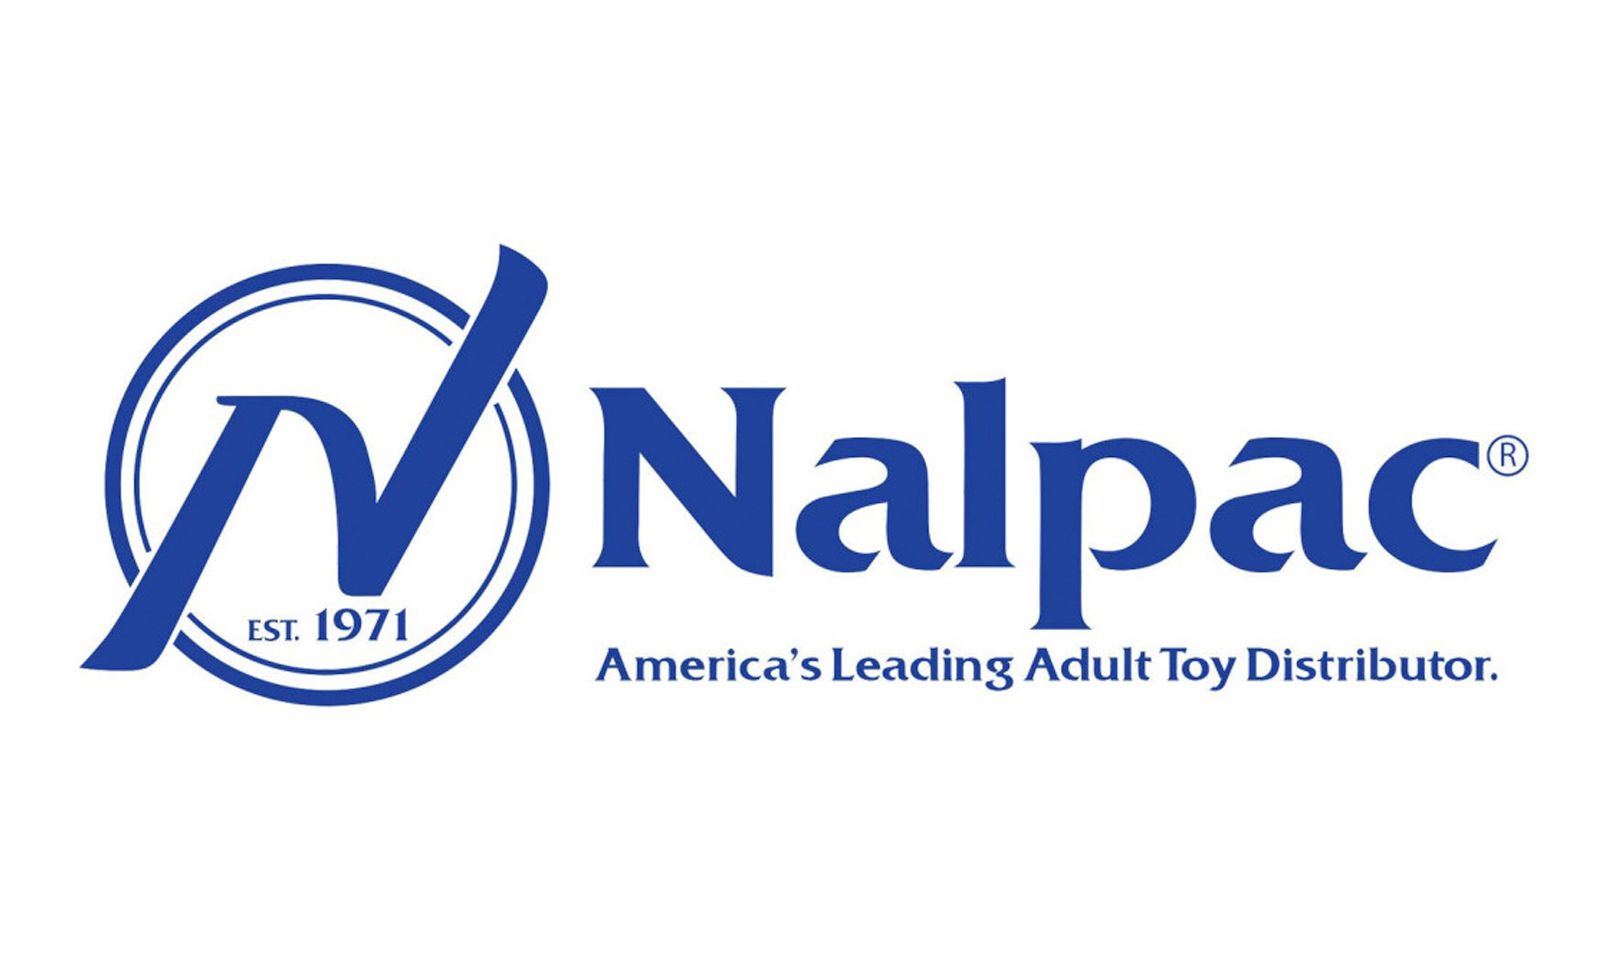 Nalpac Under New Ownership